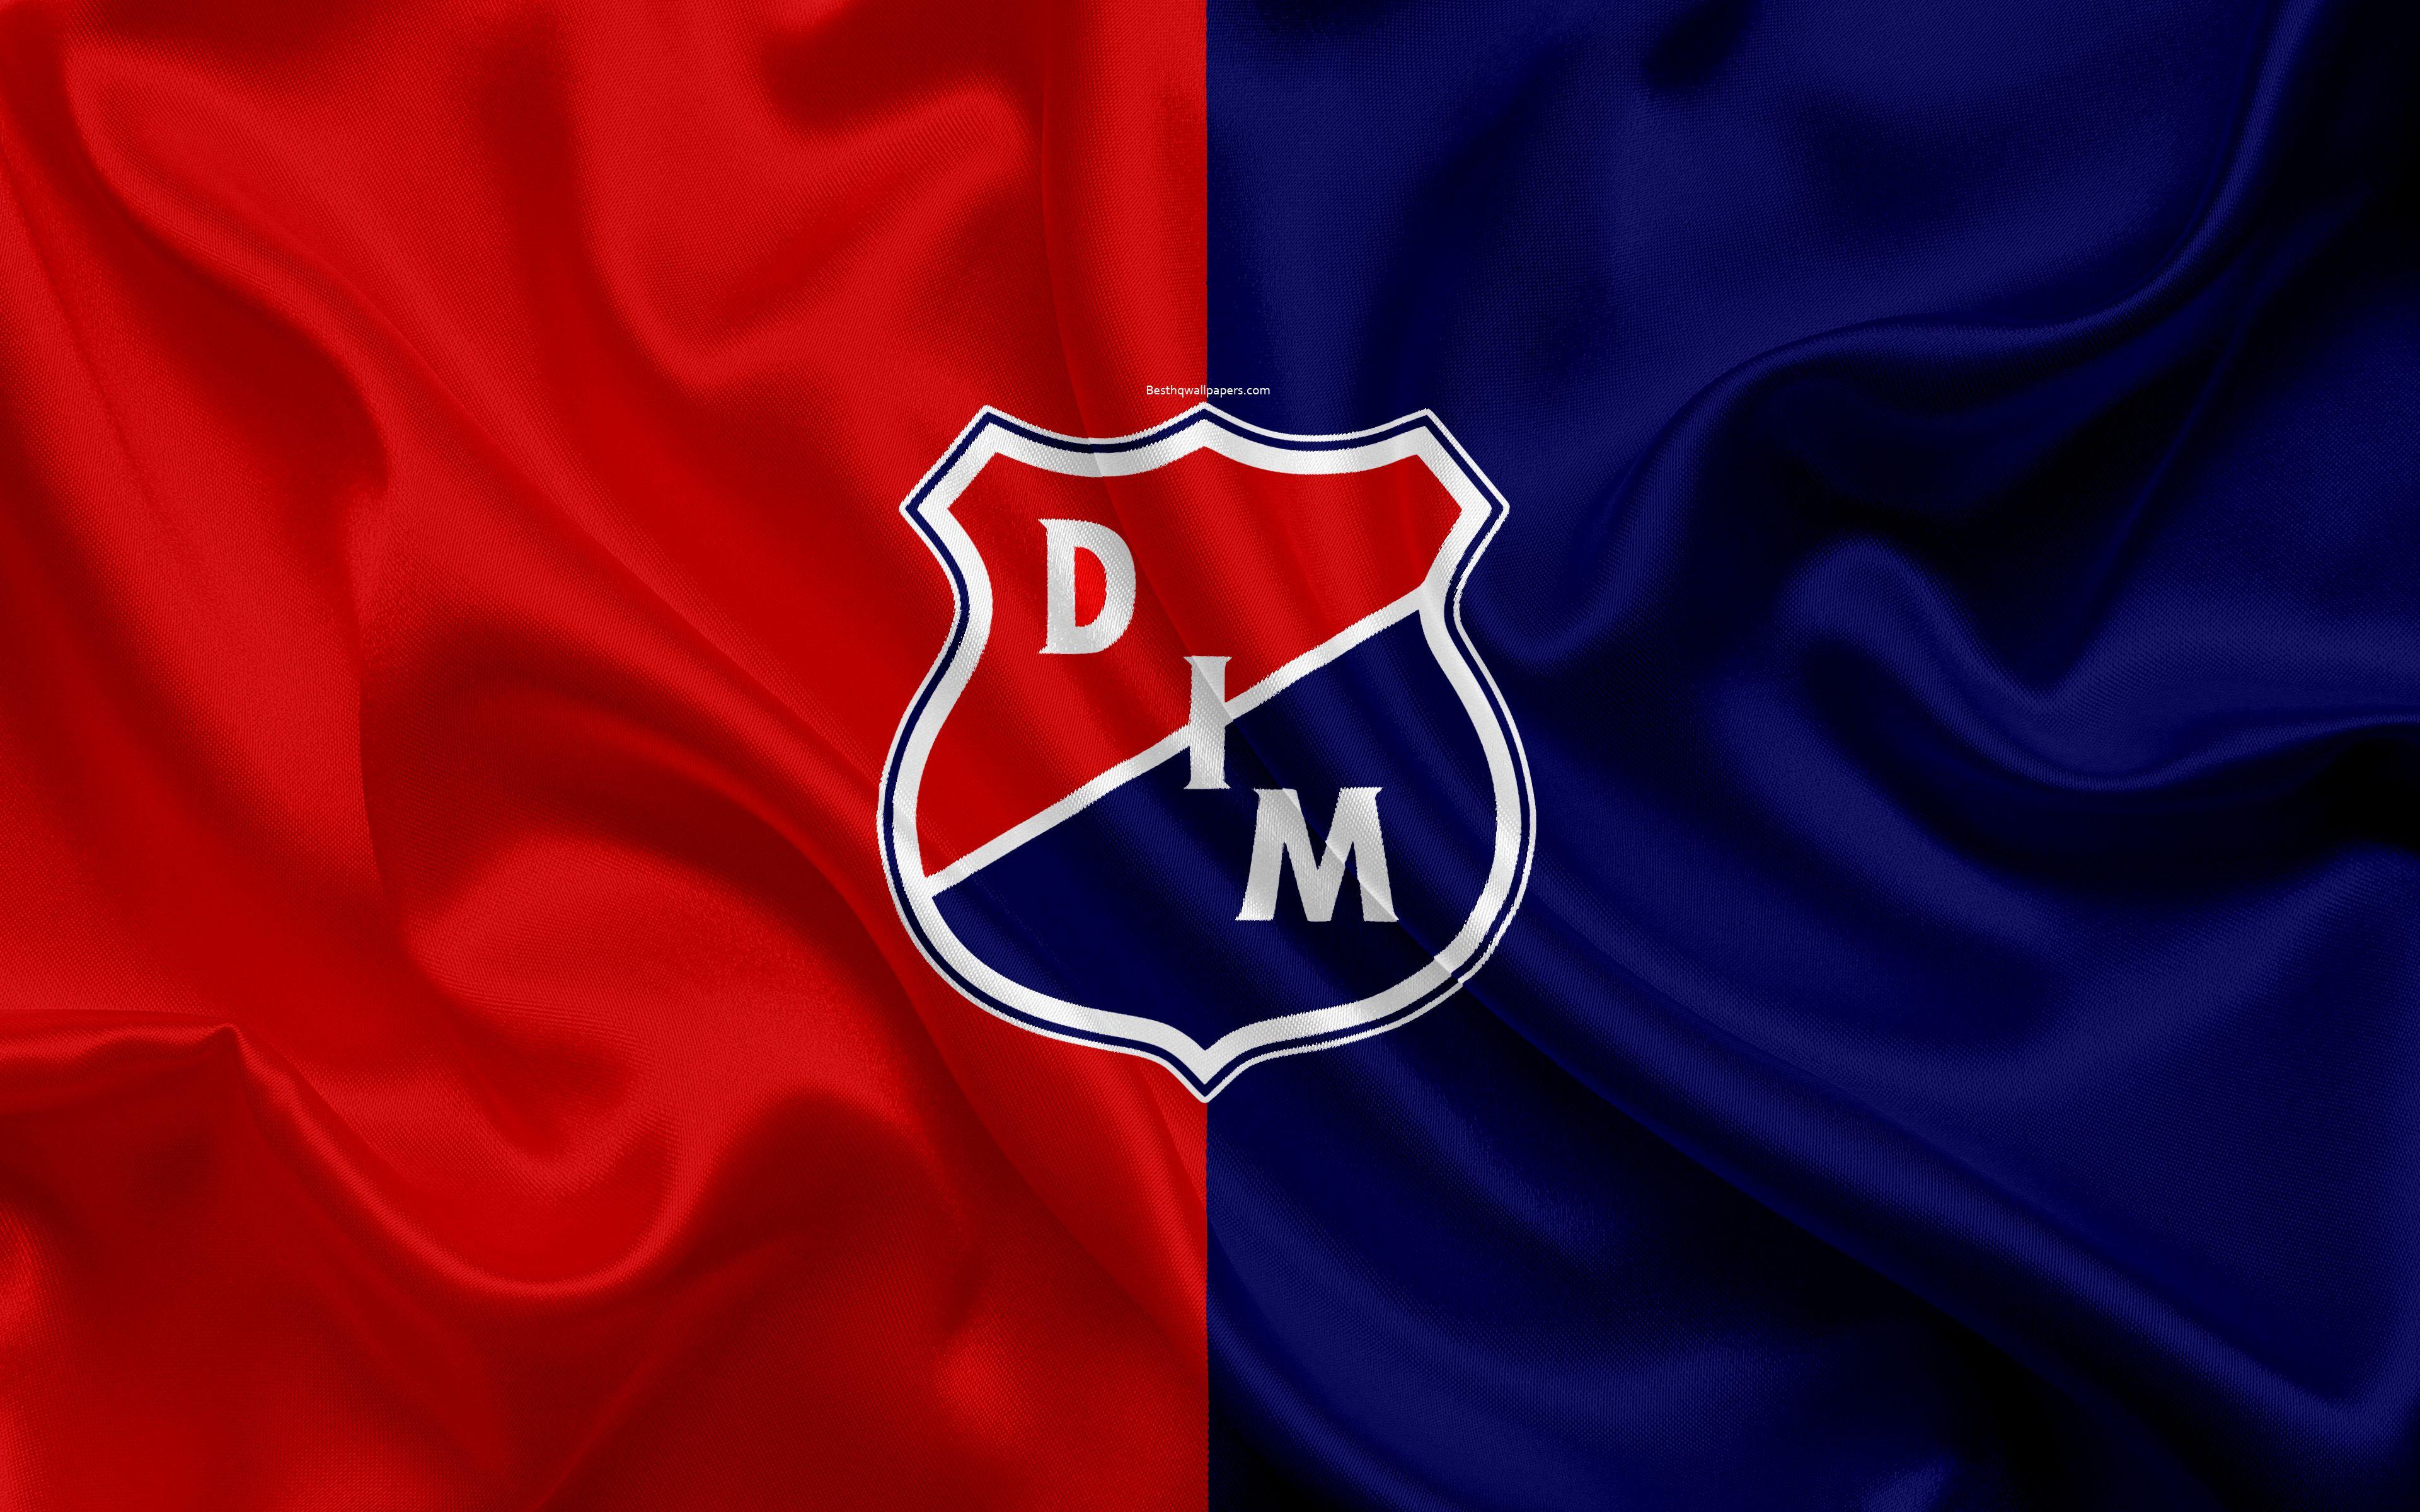 Download wallpaper Deportivo Independiente Medellin, DIM, 4k, logo